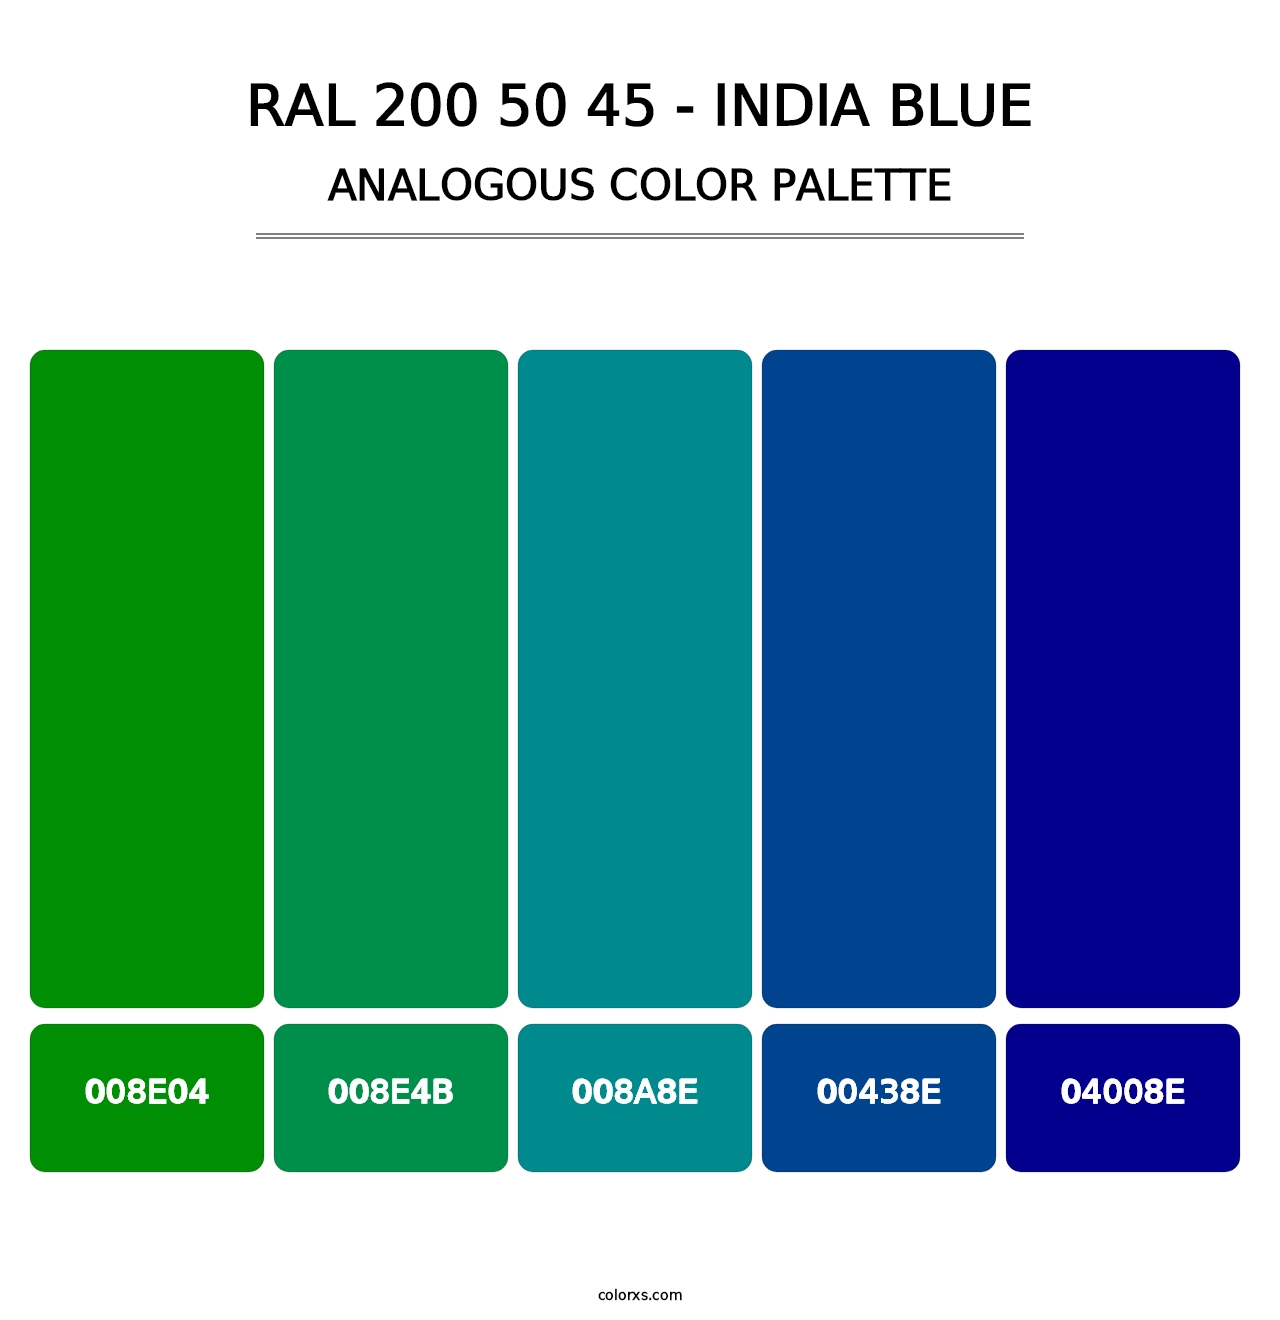 RAL 200 50 45 - India Blue - Analogous Color Palette